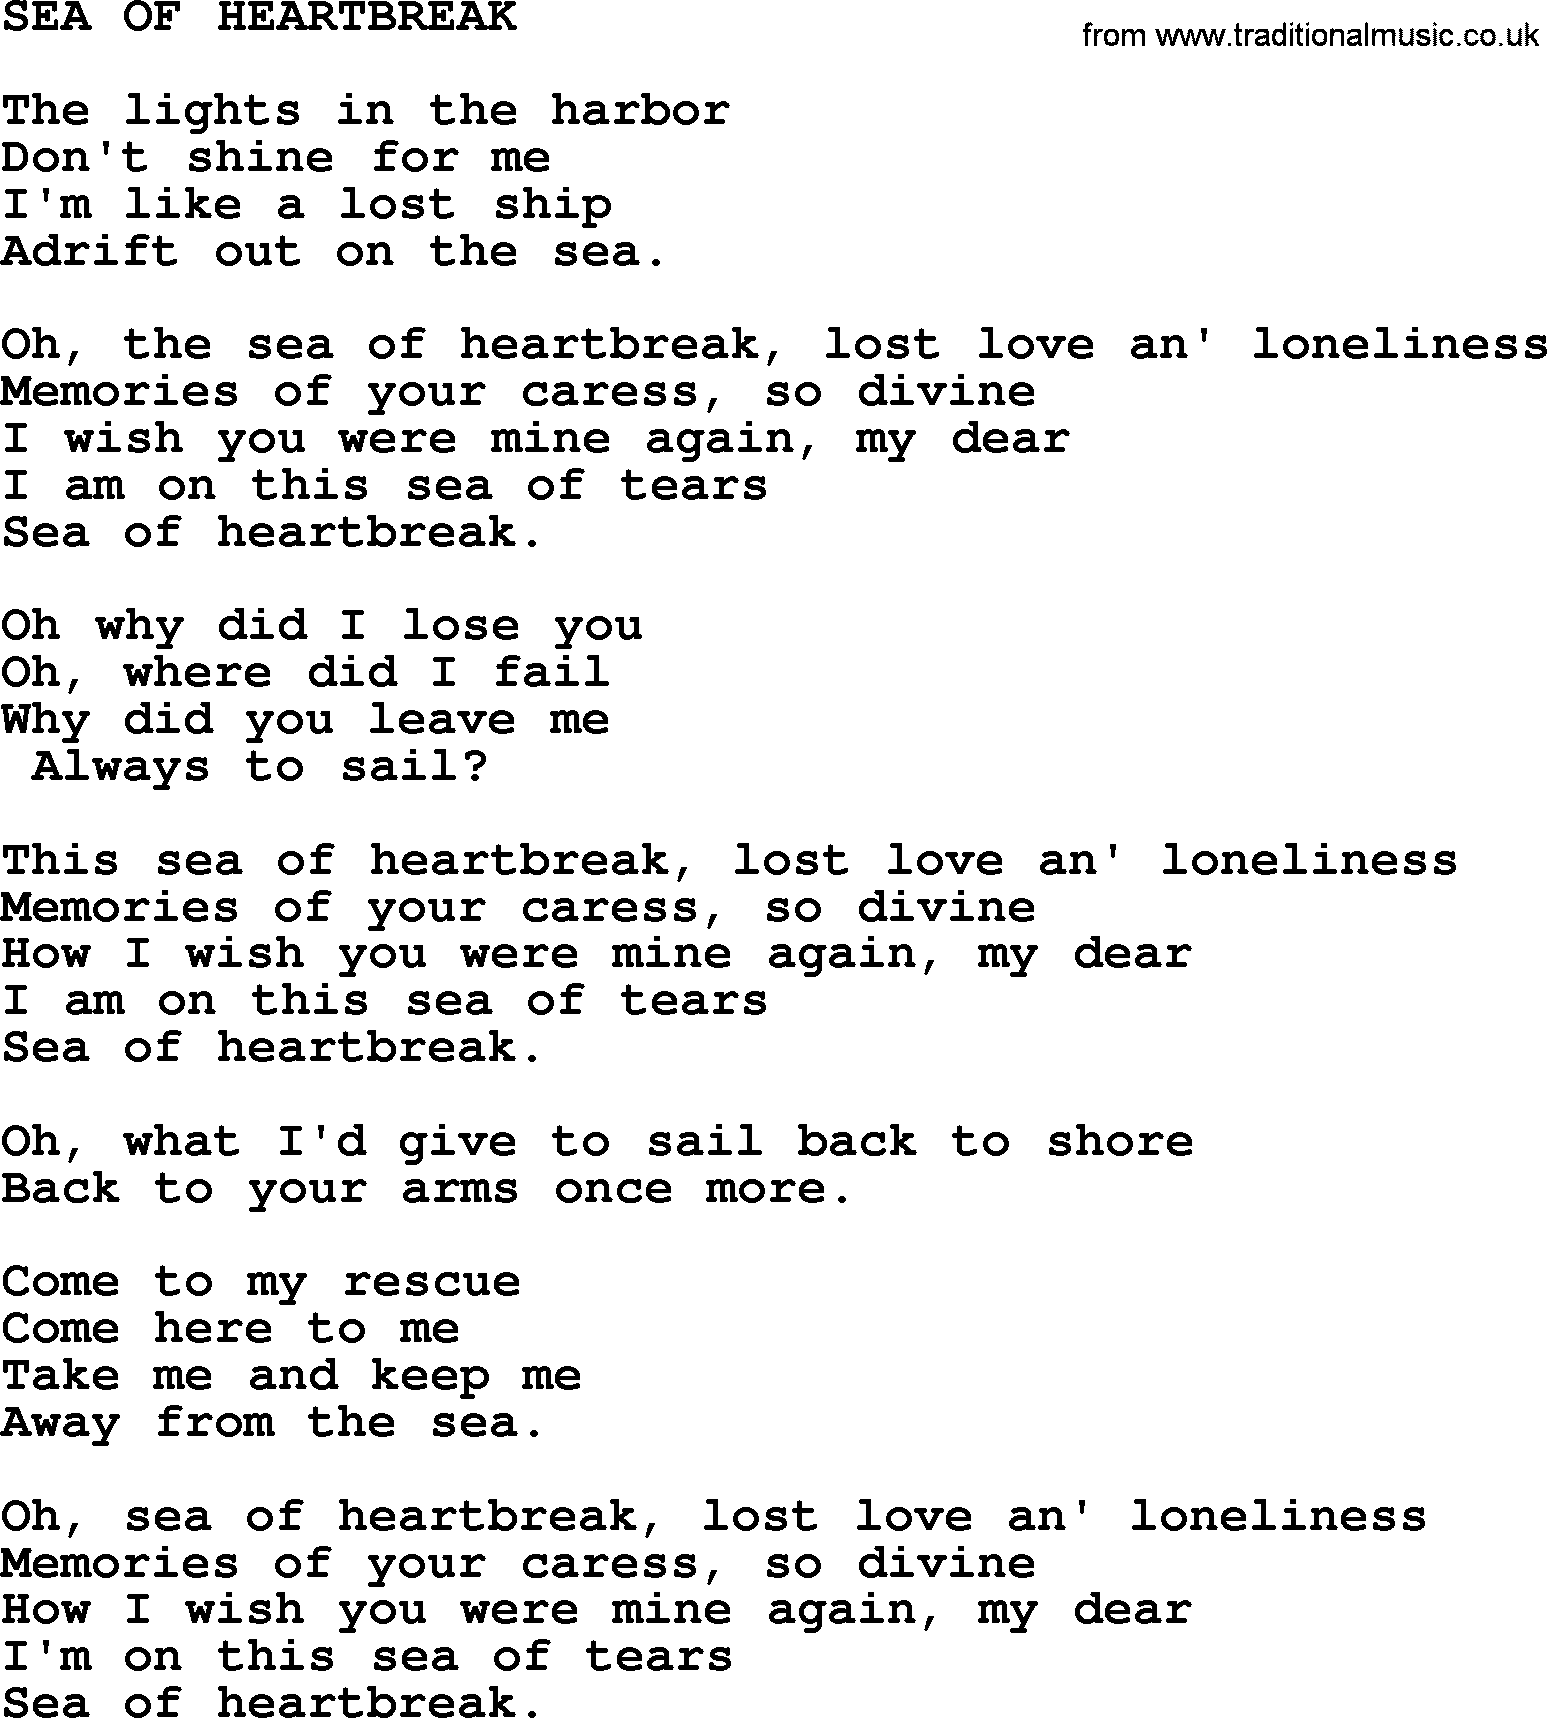 Merle Haggard song: Sea Of Heartbreak, lyrics.